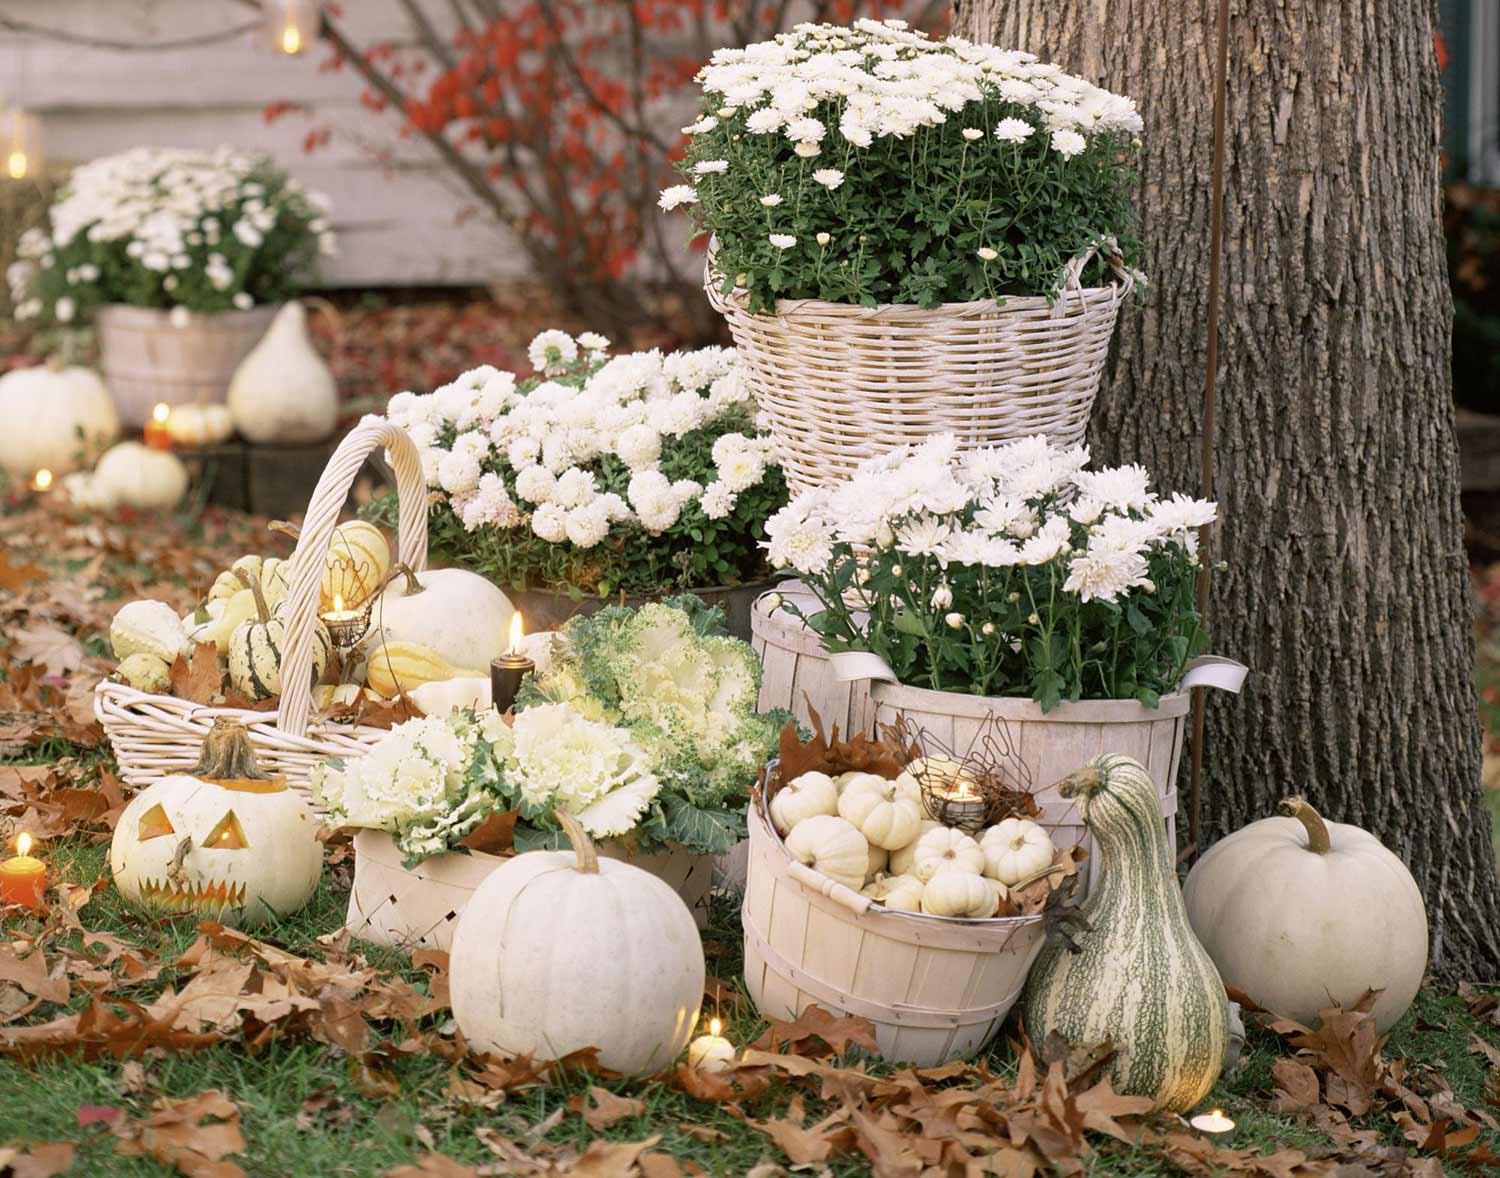 Monochromatic white fall decorative gourd display